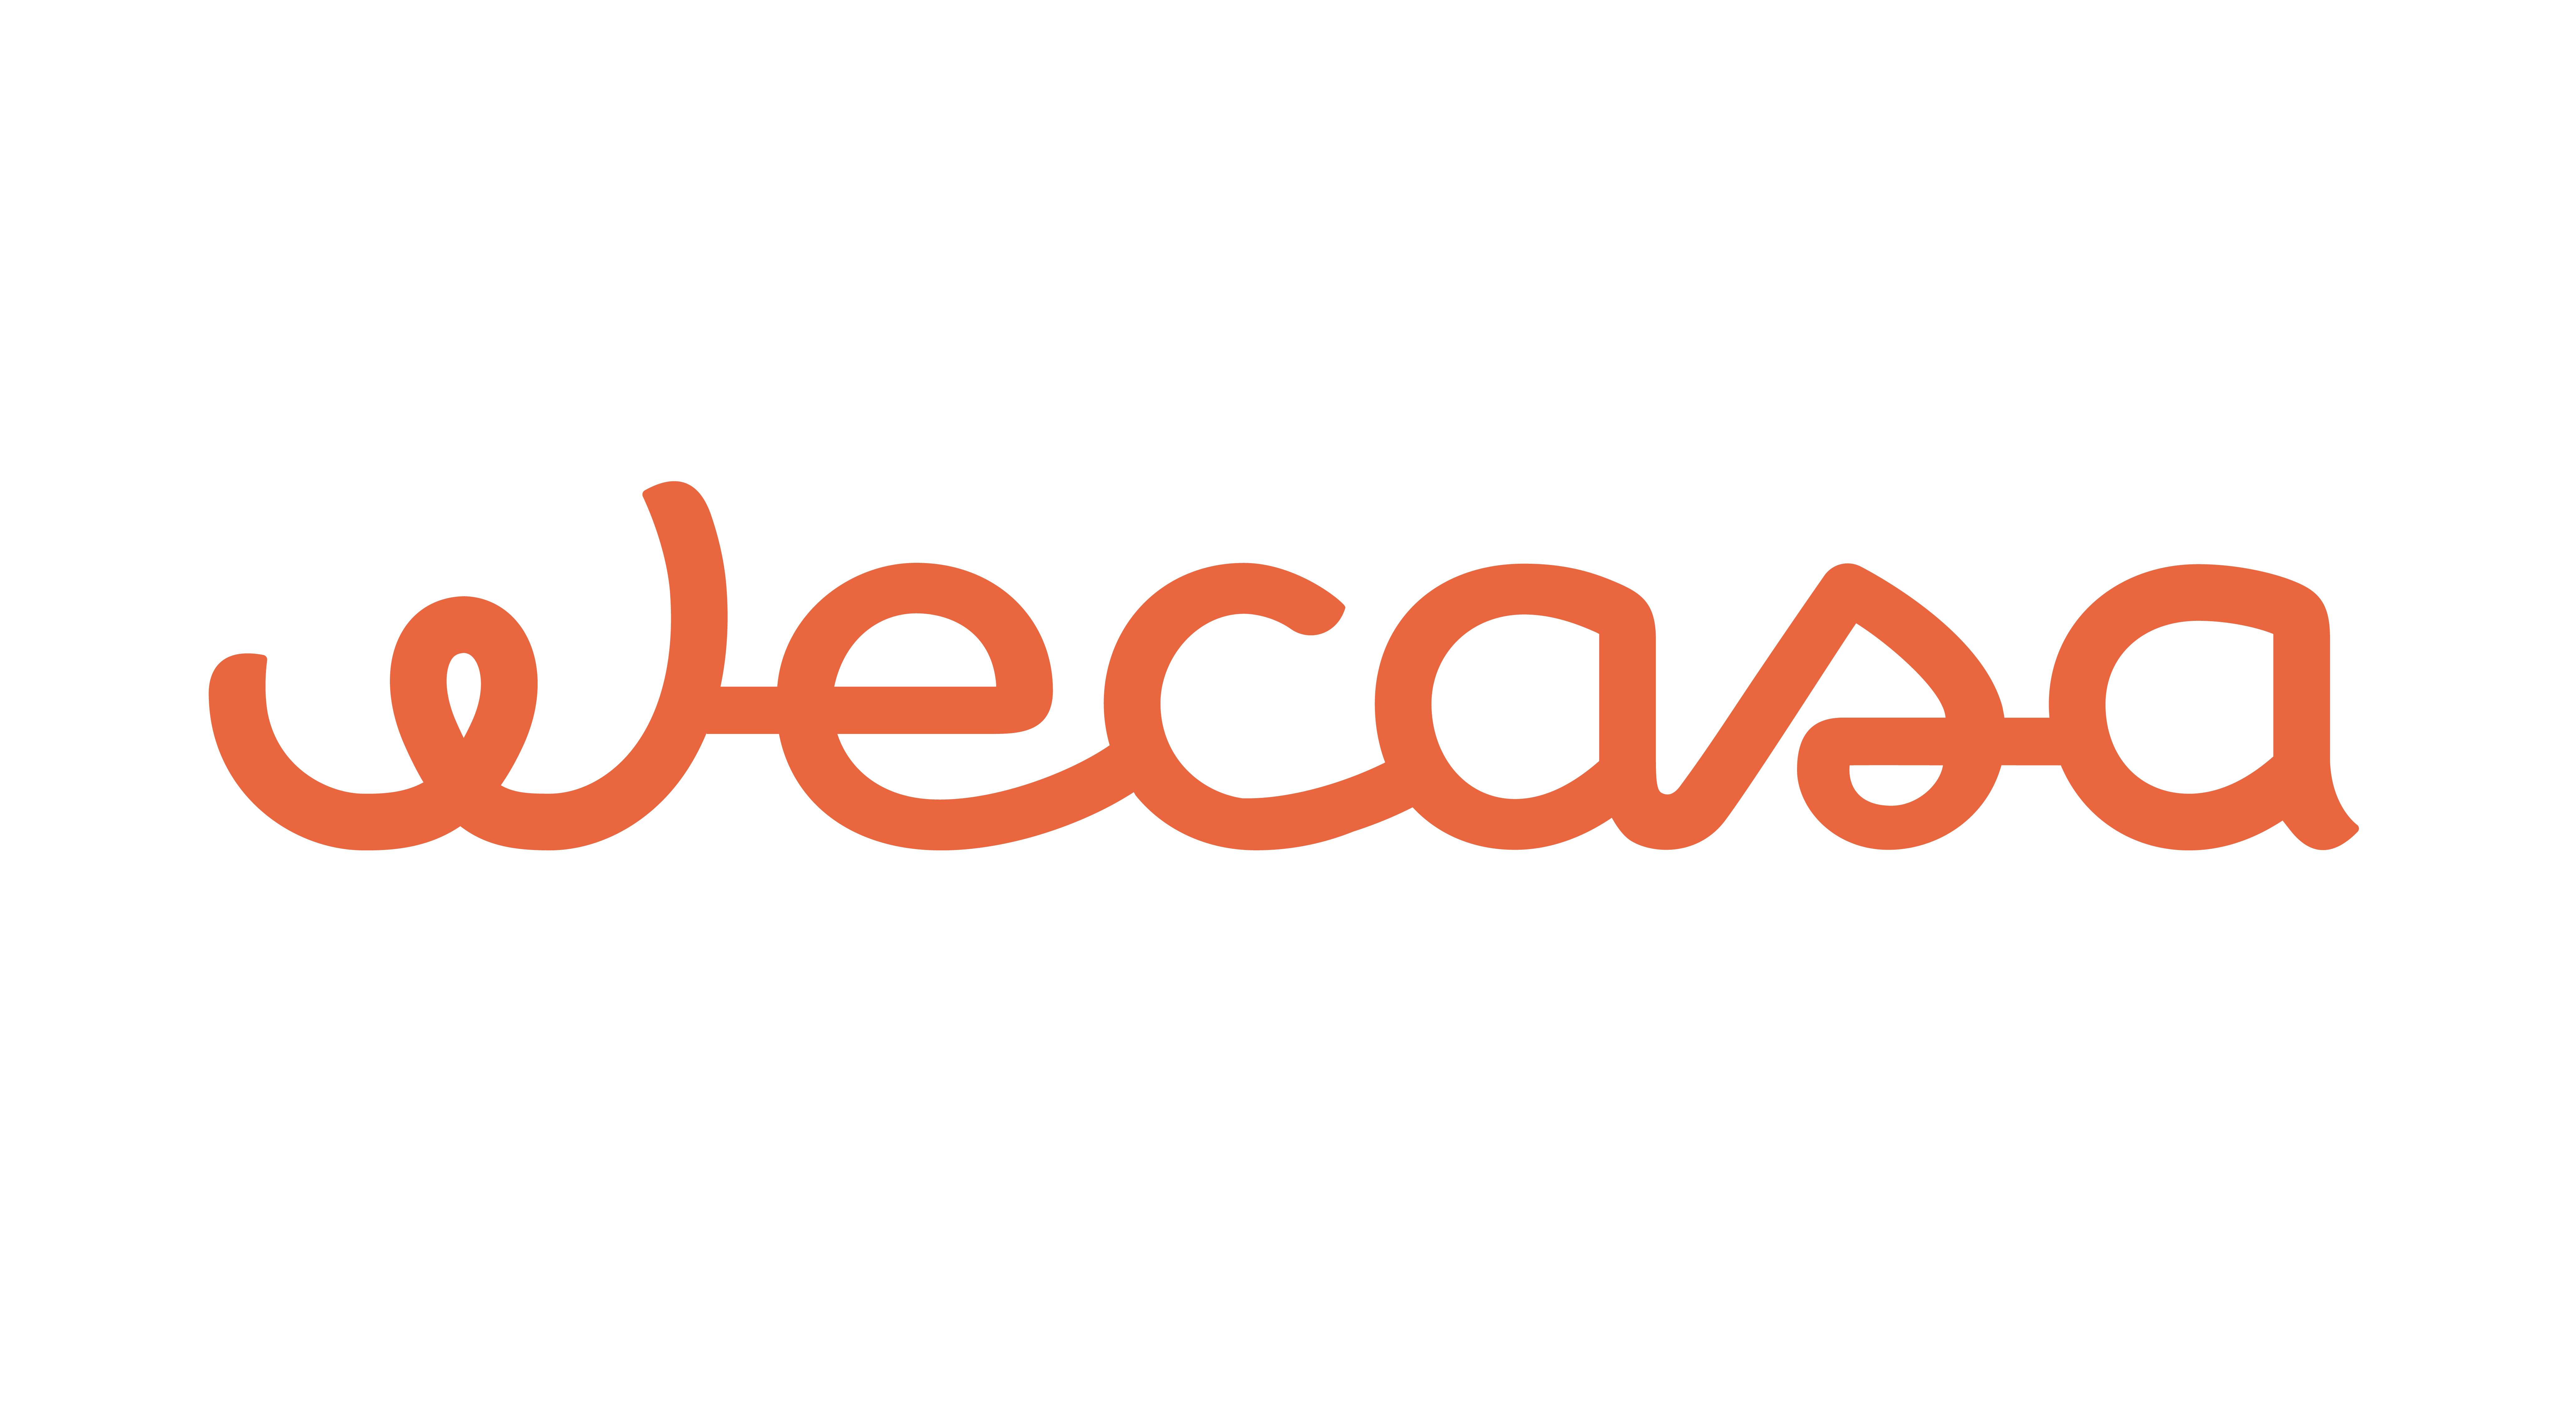 Wecasa's logo